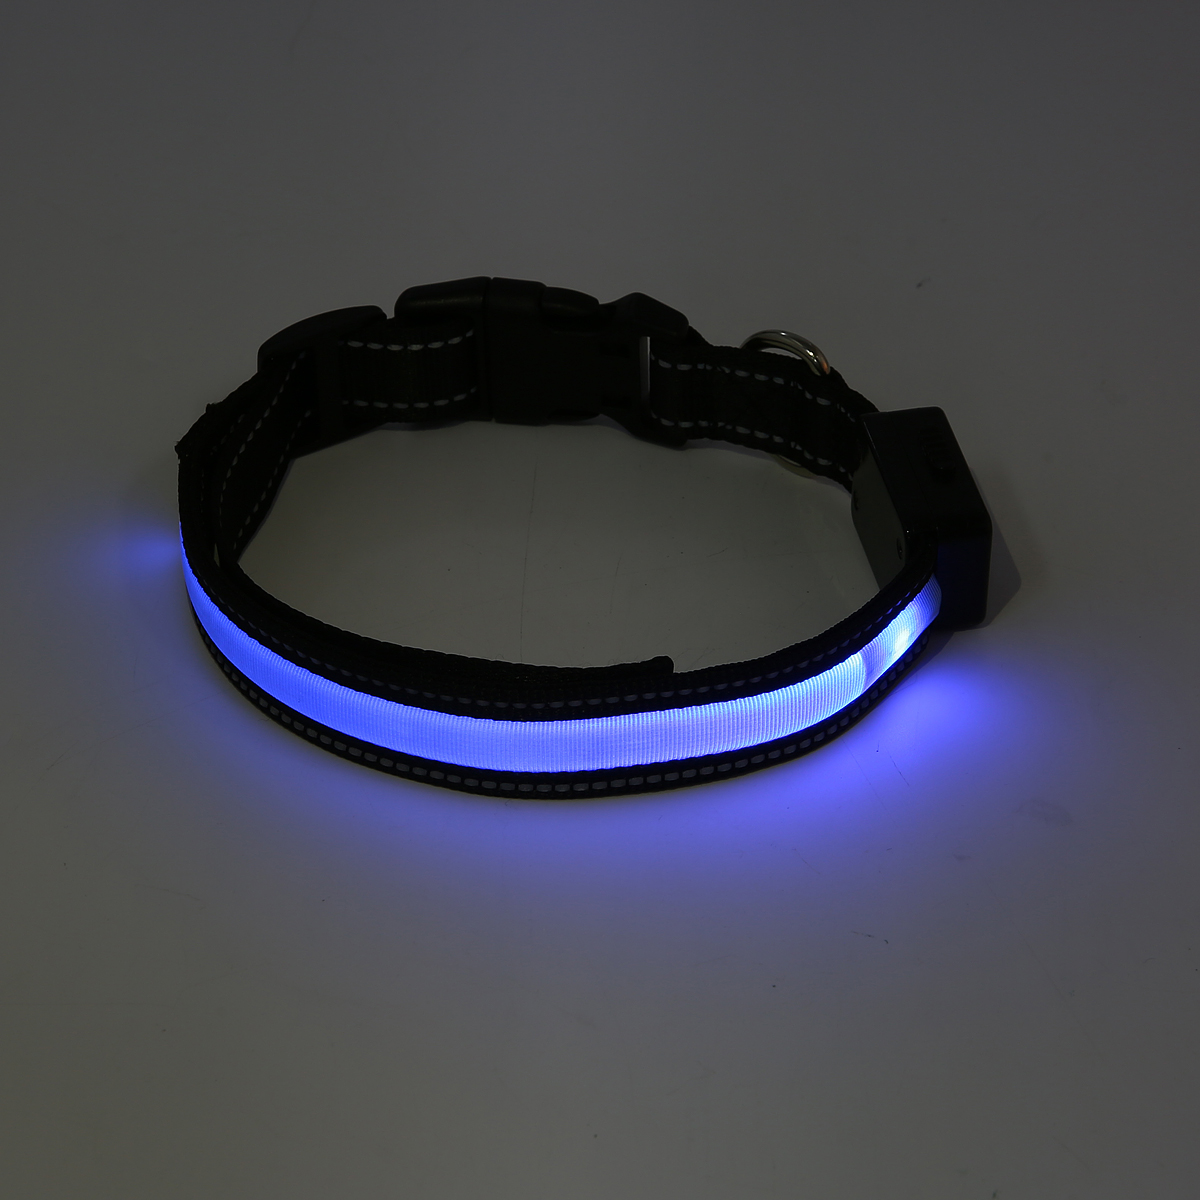 Outdoor-Nylon-LED-Pet-Dog-Collar-Night-Safety-Anti-lost-Flashing-Glow-Collars-Supplies-1244419-2